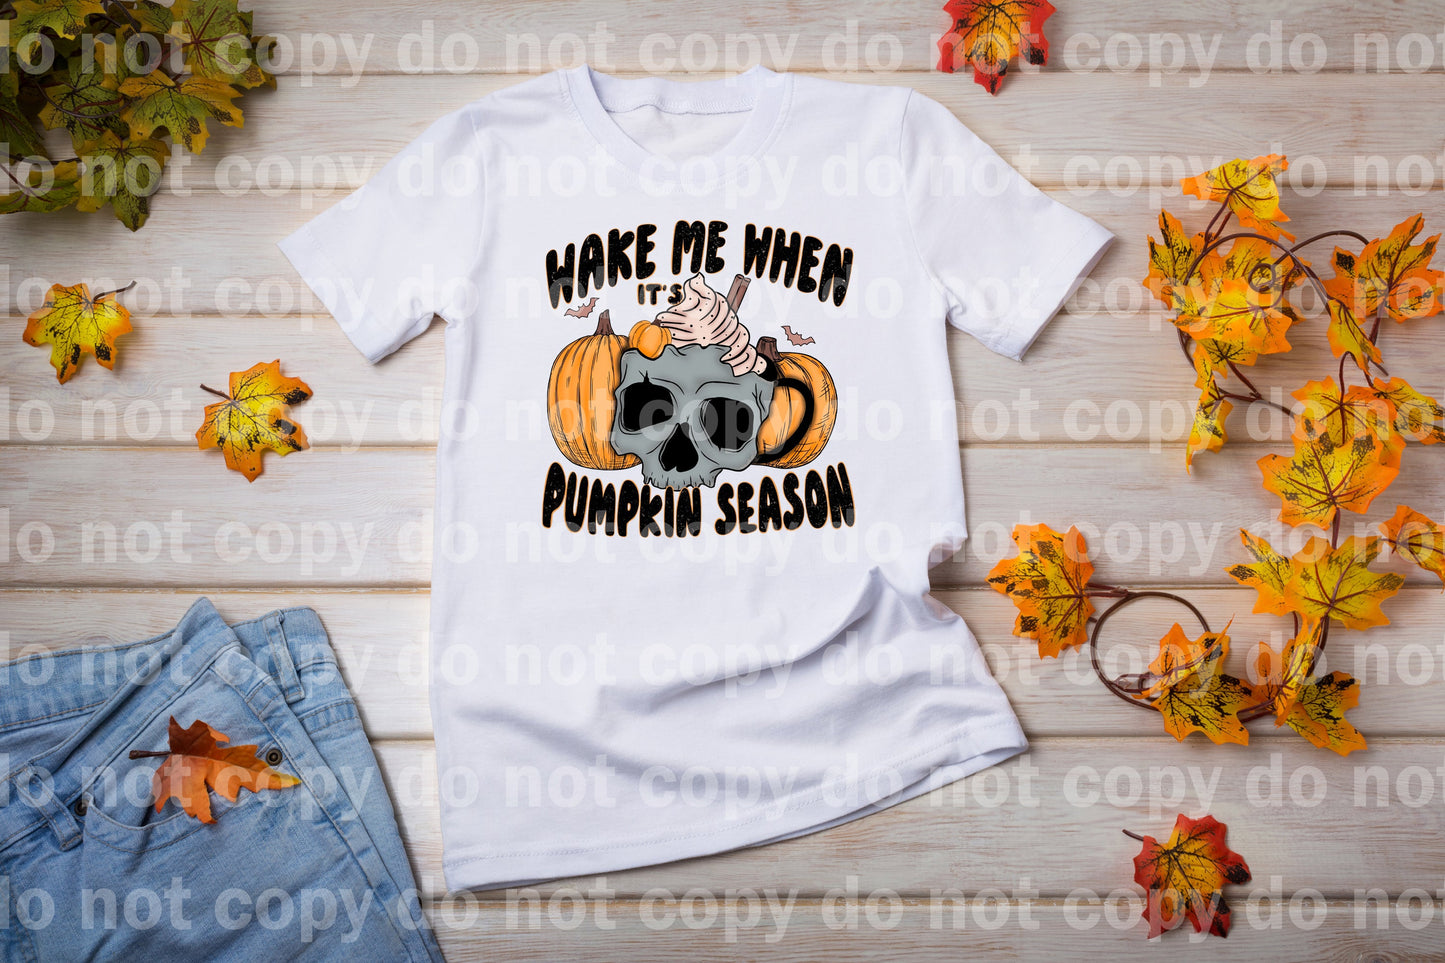 Wake Me When It's Pumpkin Season Dream Print or Sublimation Print